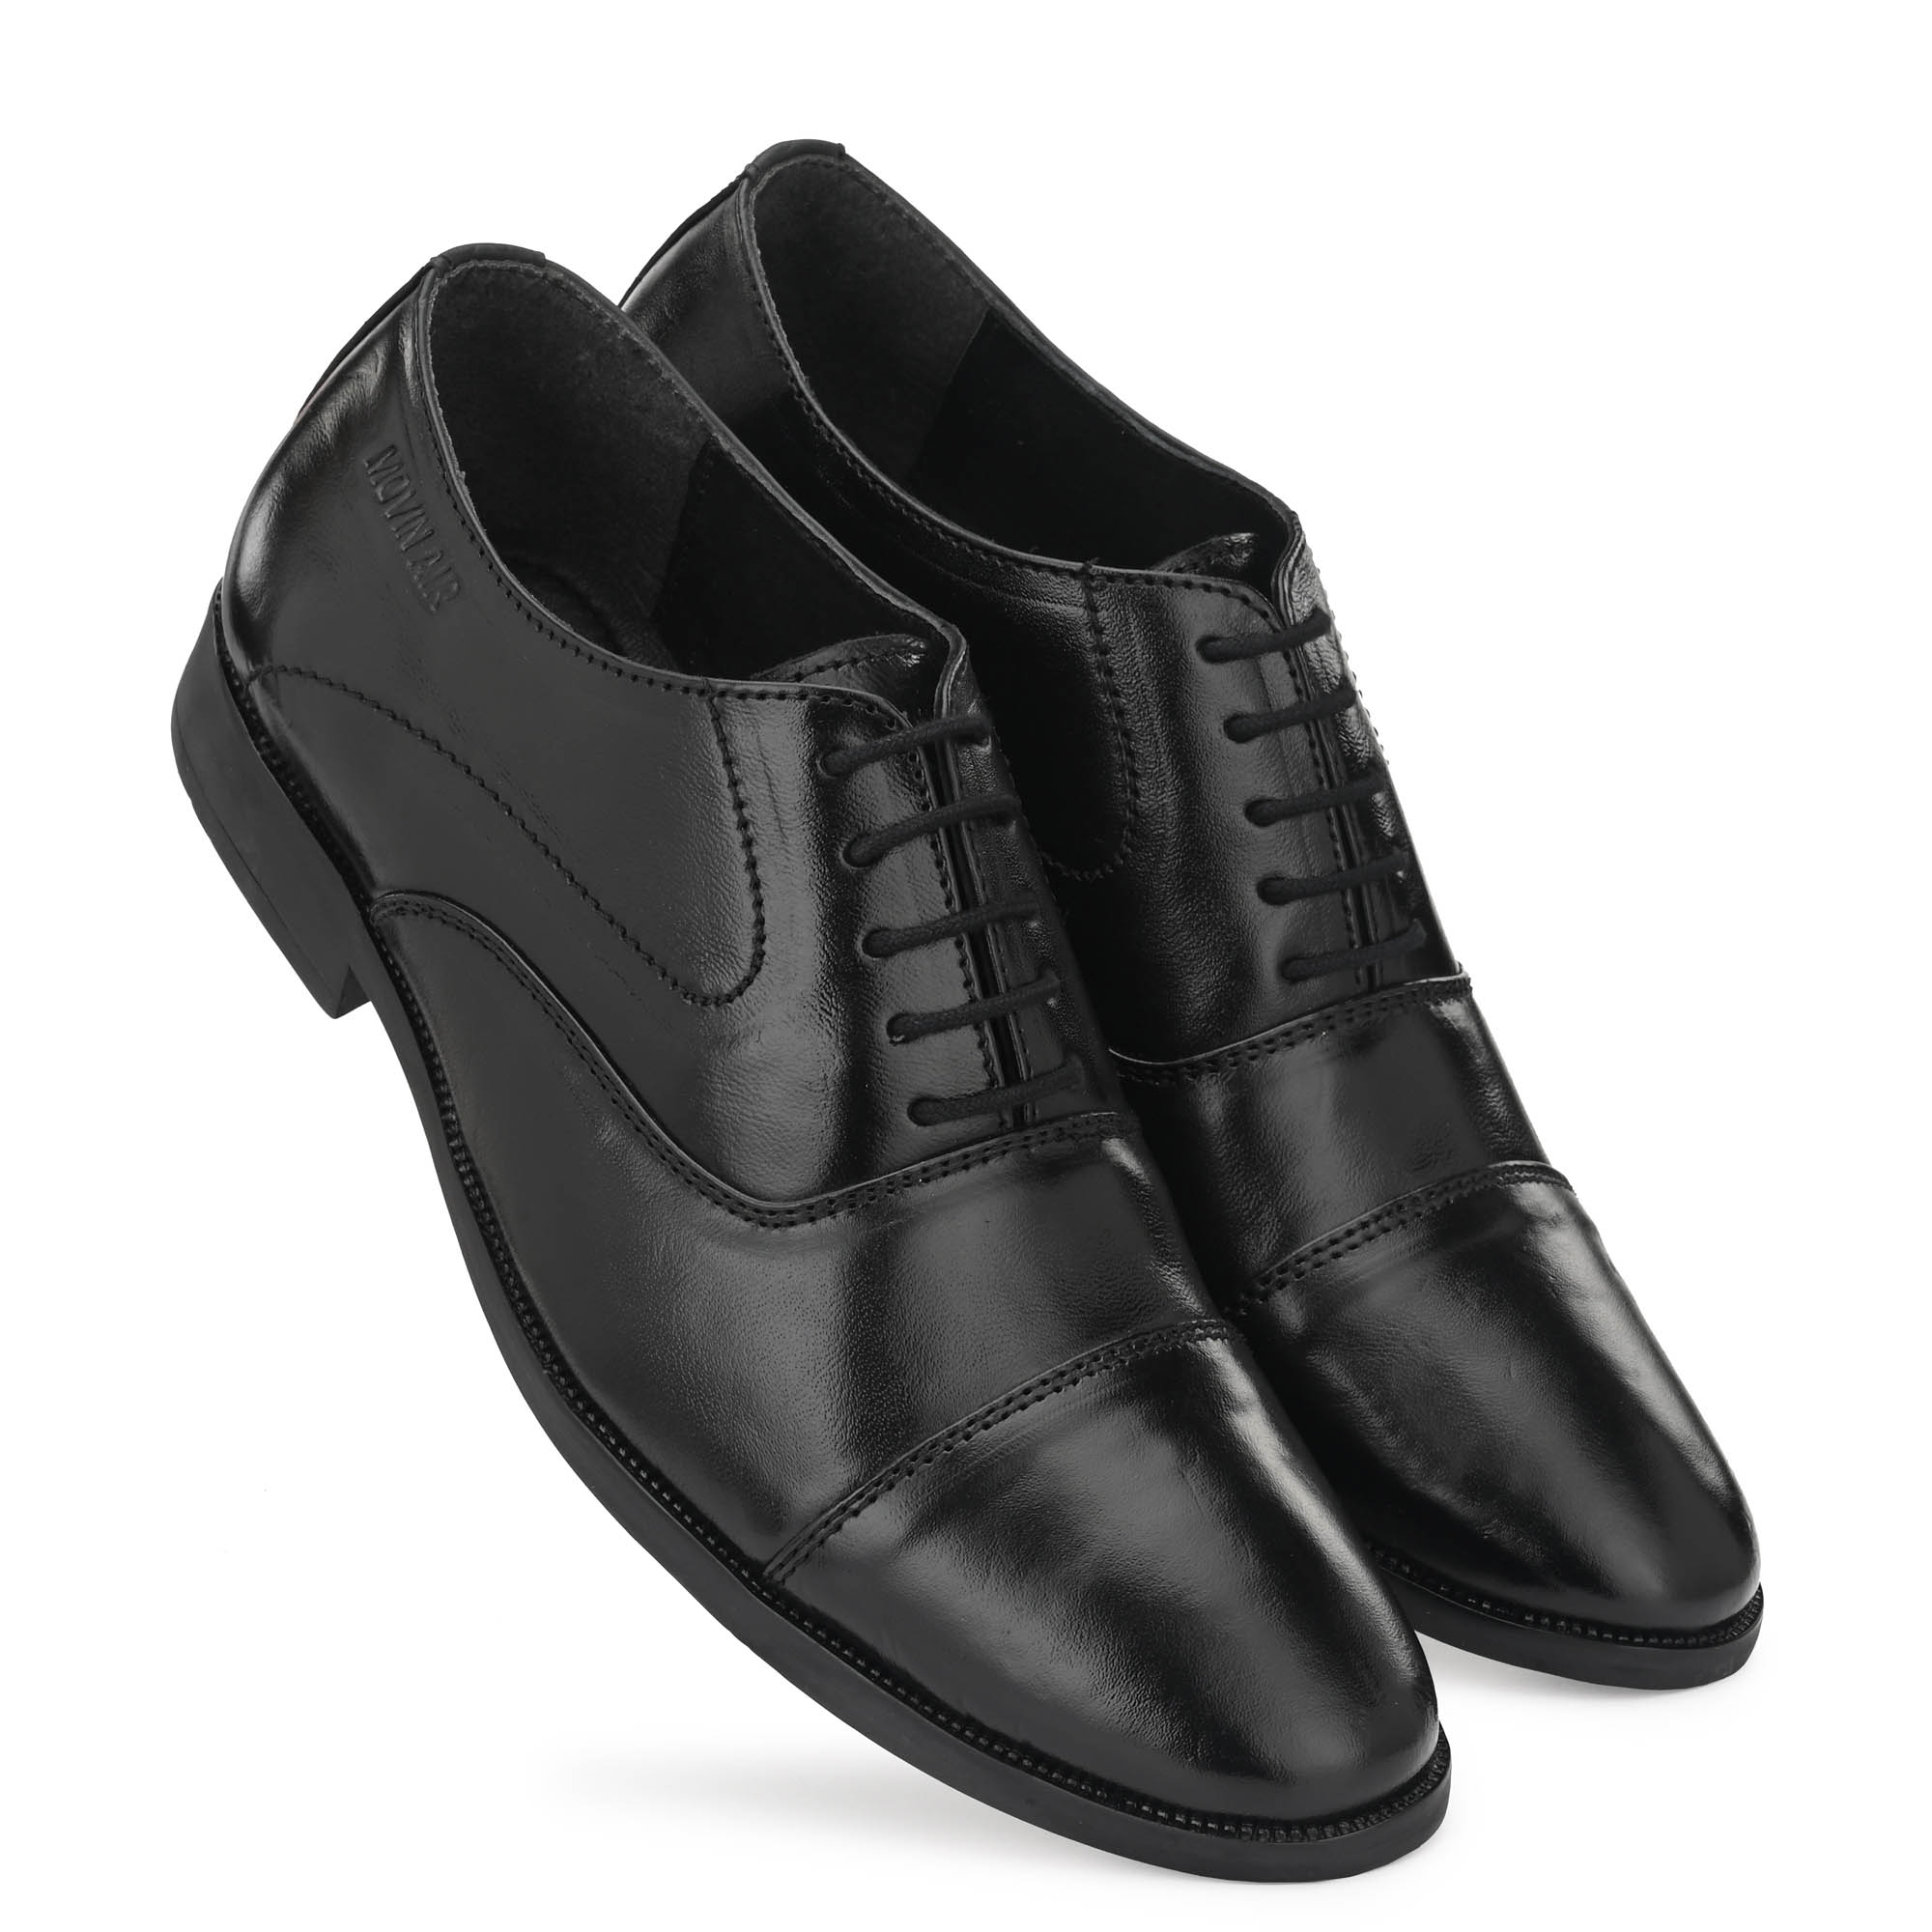 New Men Fashion Dress Shoes Formal Oxford Casual Lace Up Size-7.5-13 NOVAK  01 | eBay